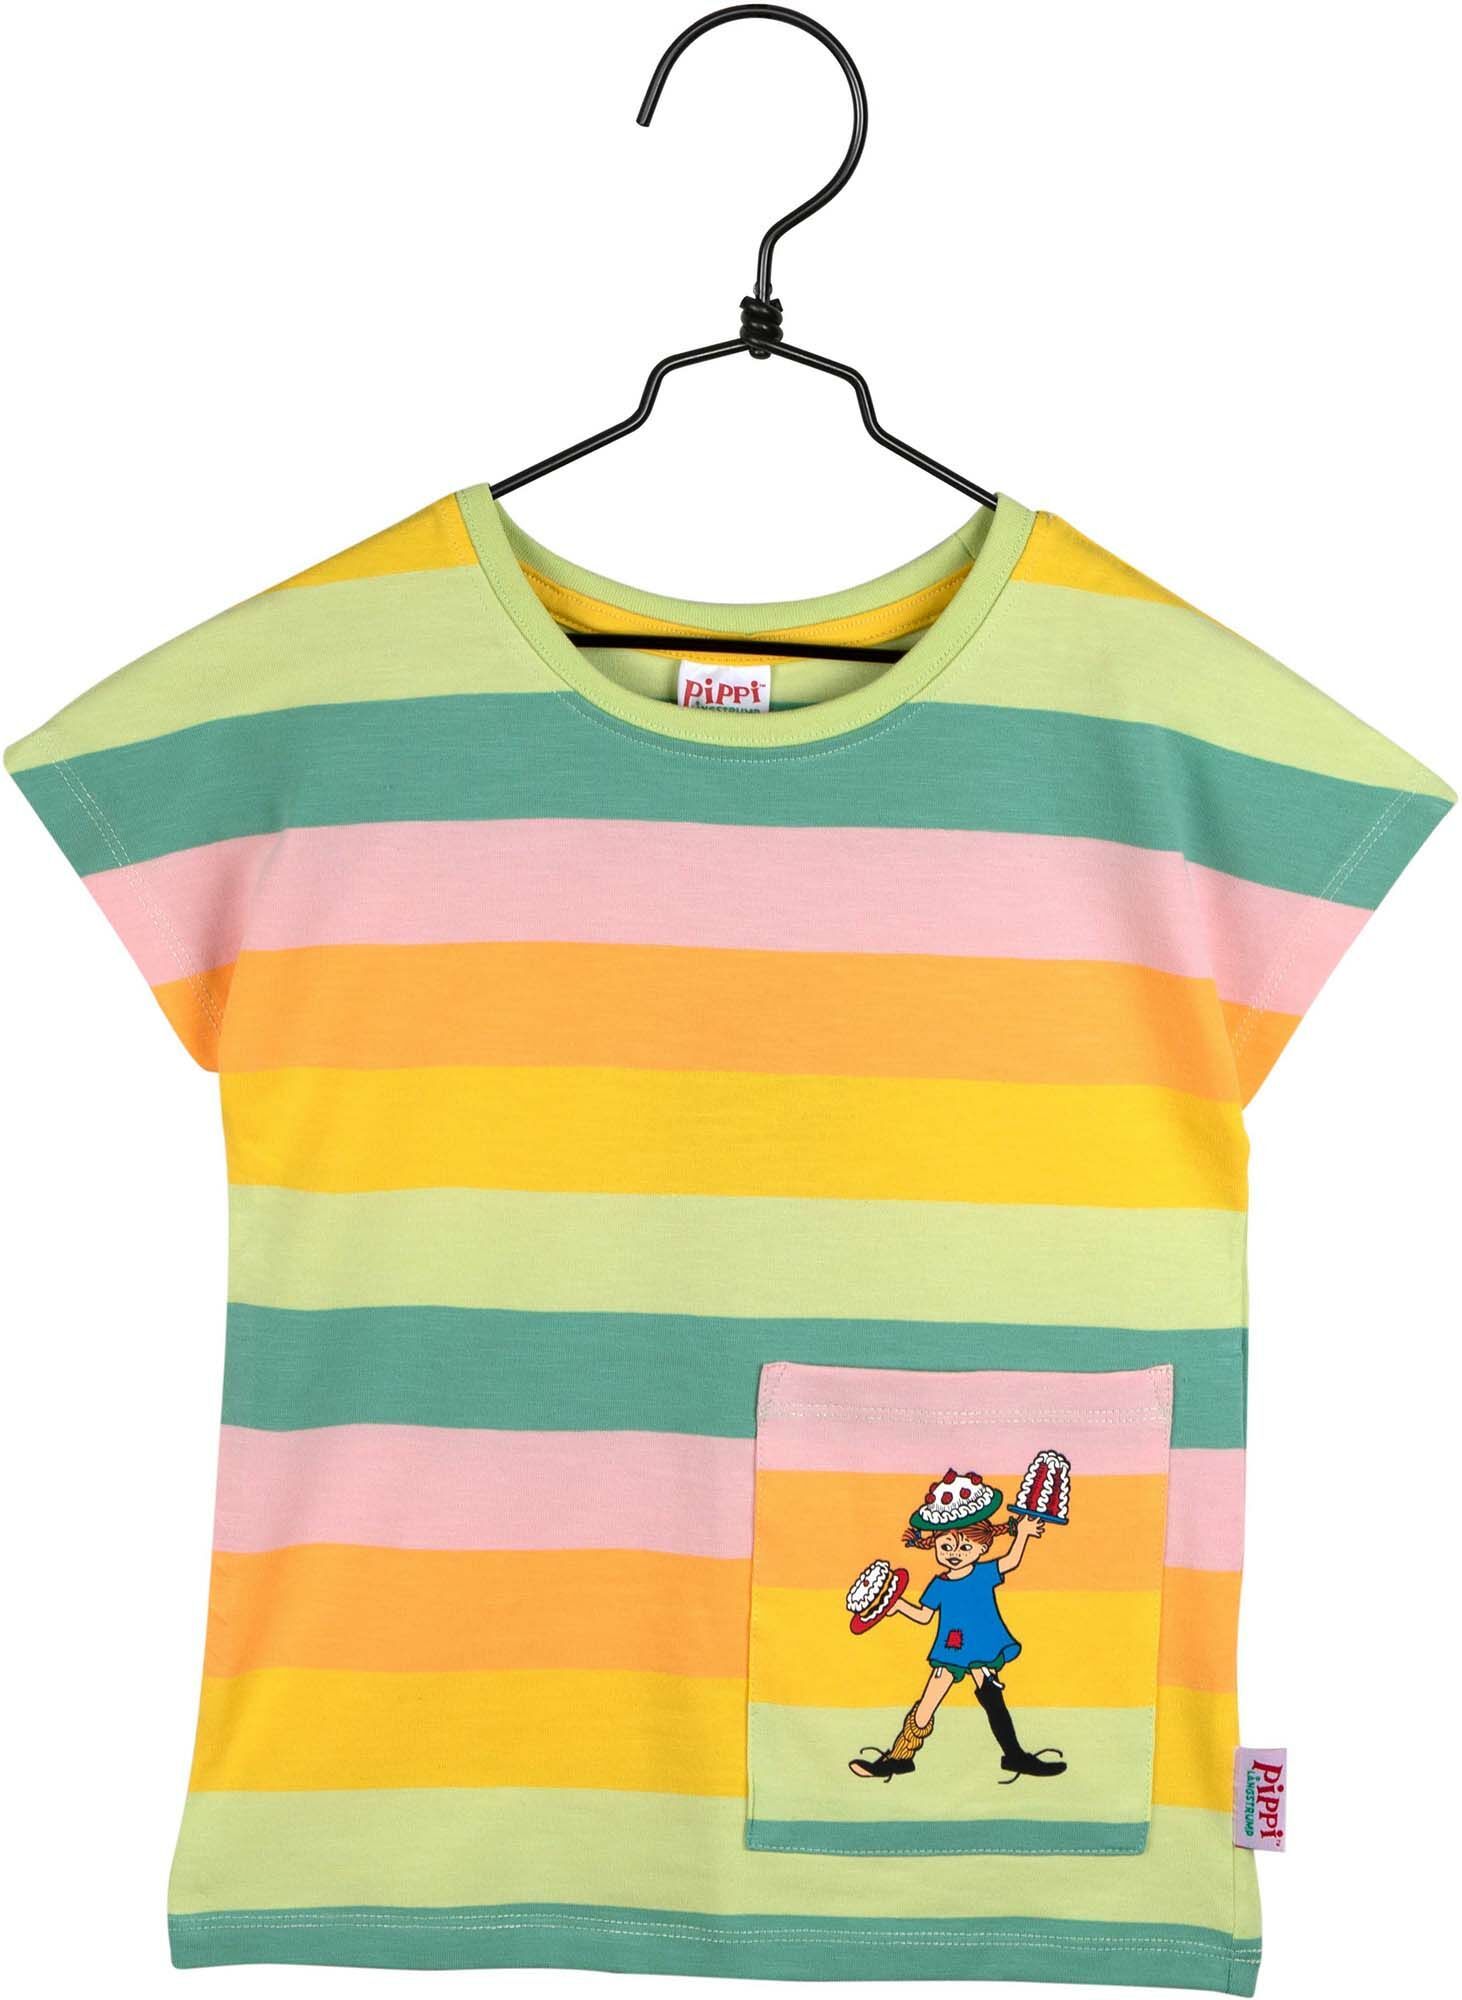 Pippi Långstrump Regnbåge T-Shirt Grön 122